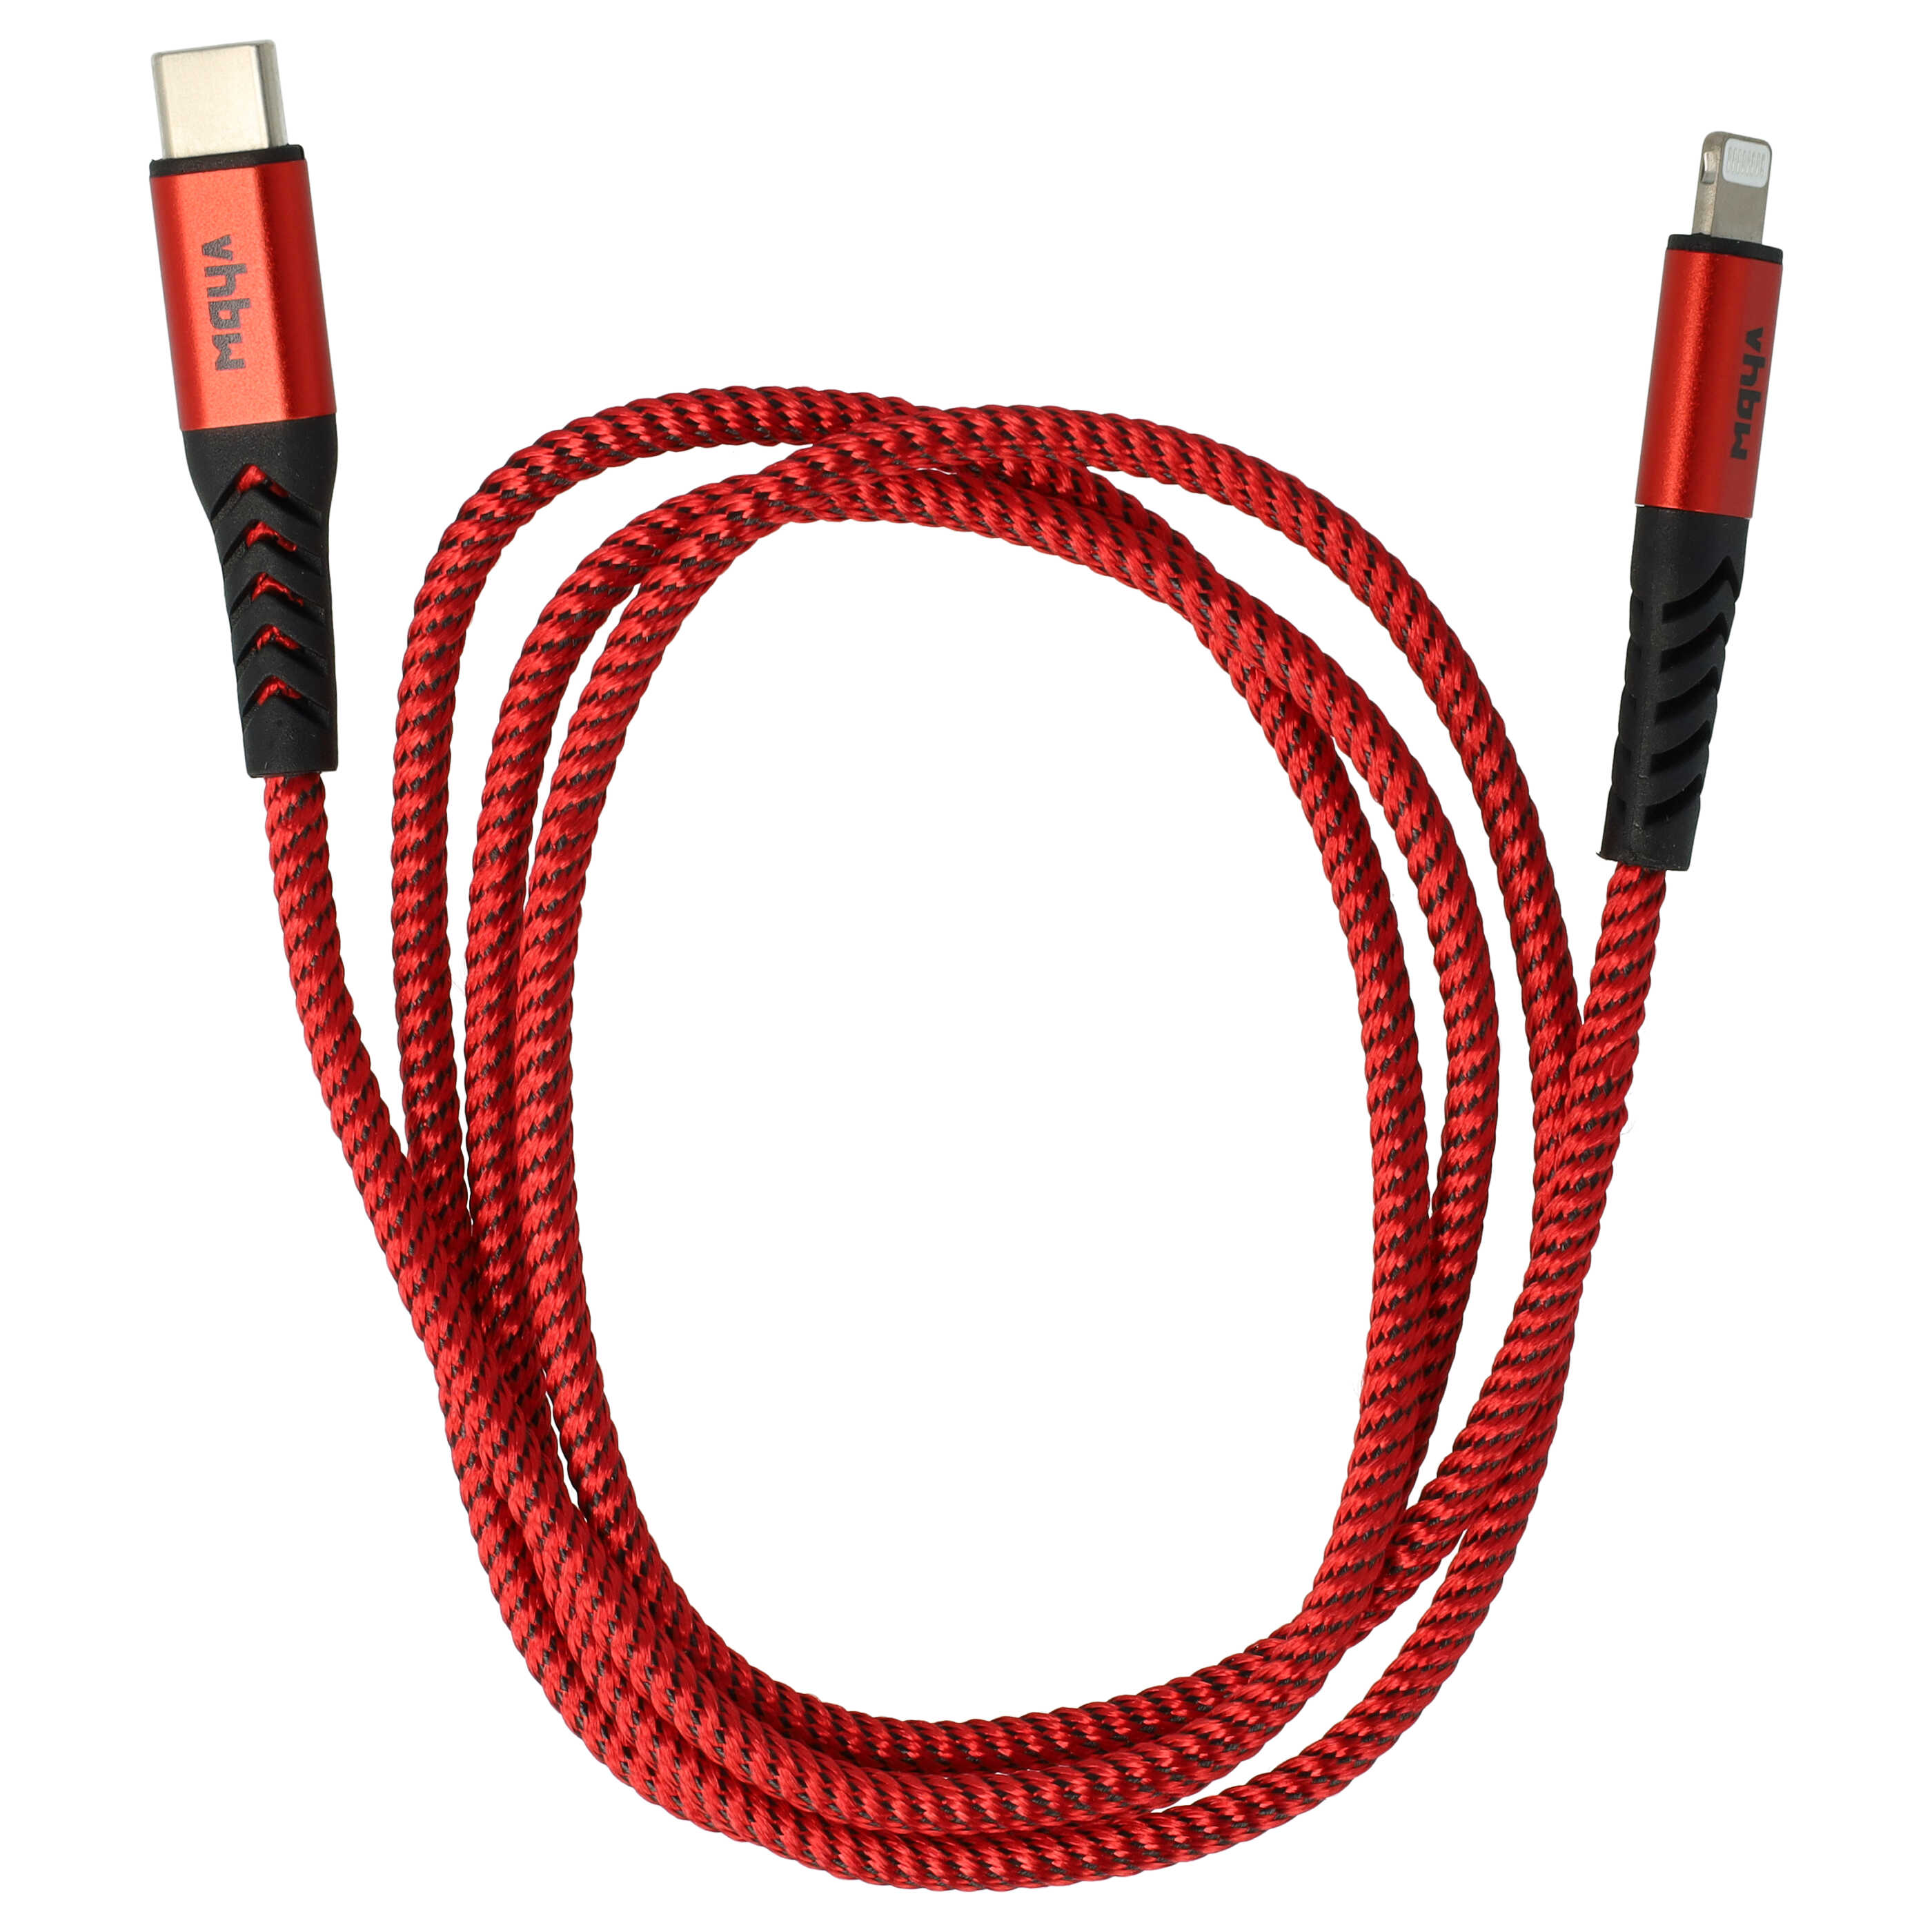 Câble Lightning vers USB C, Thunderbolt 3 pour iOS Apple MacBook - noir / rouge, 100cm